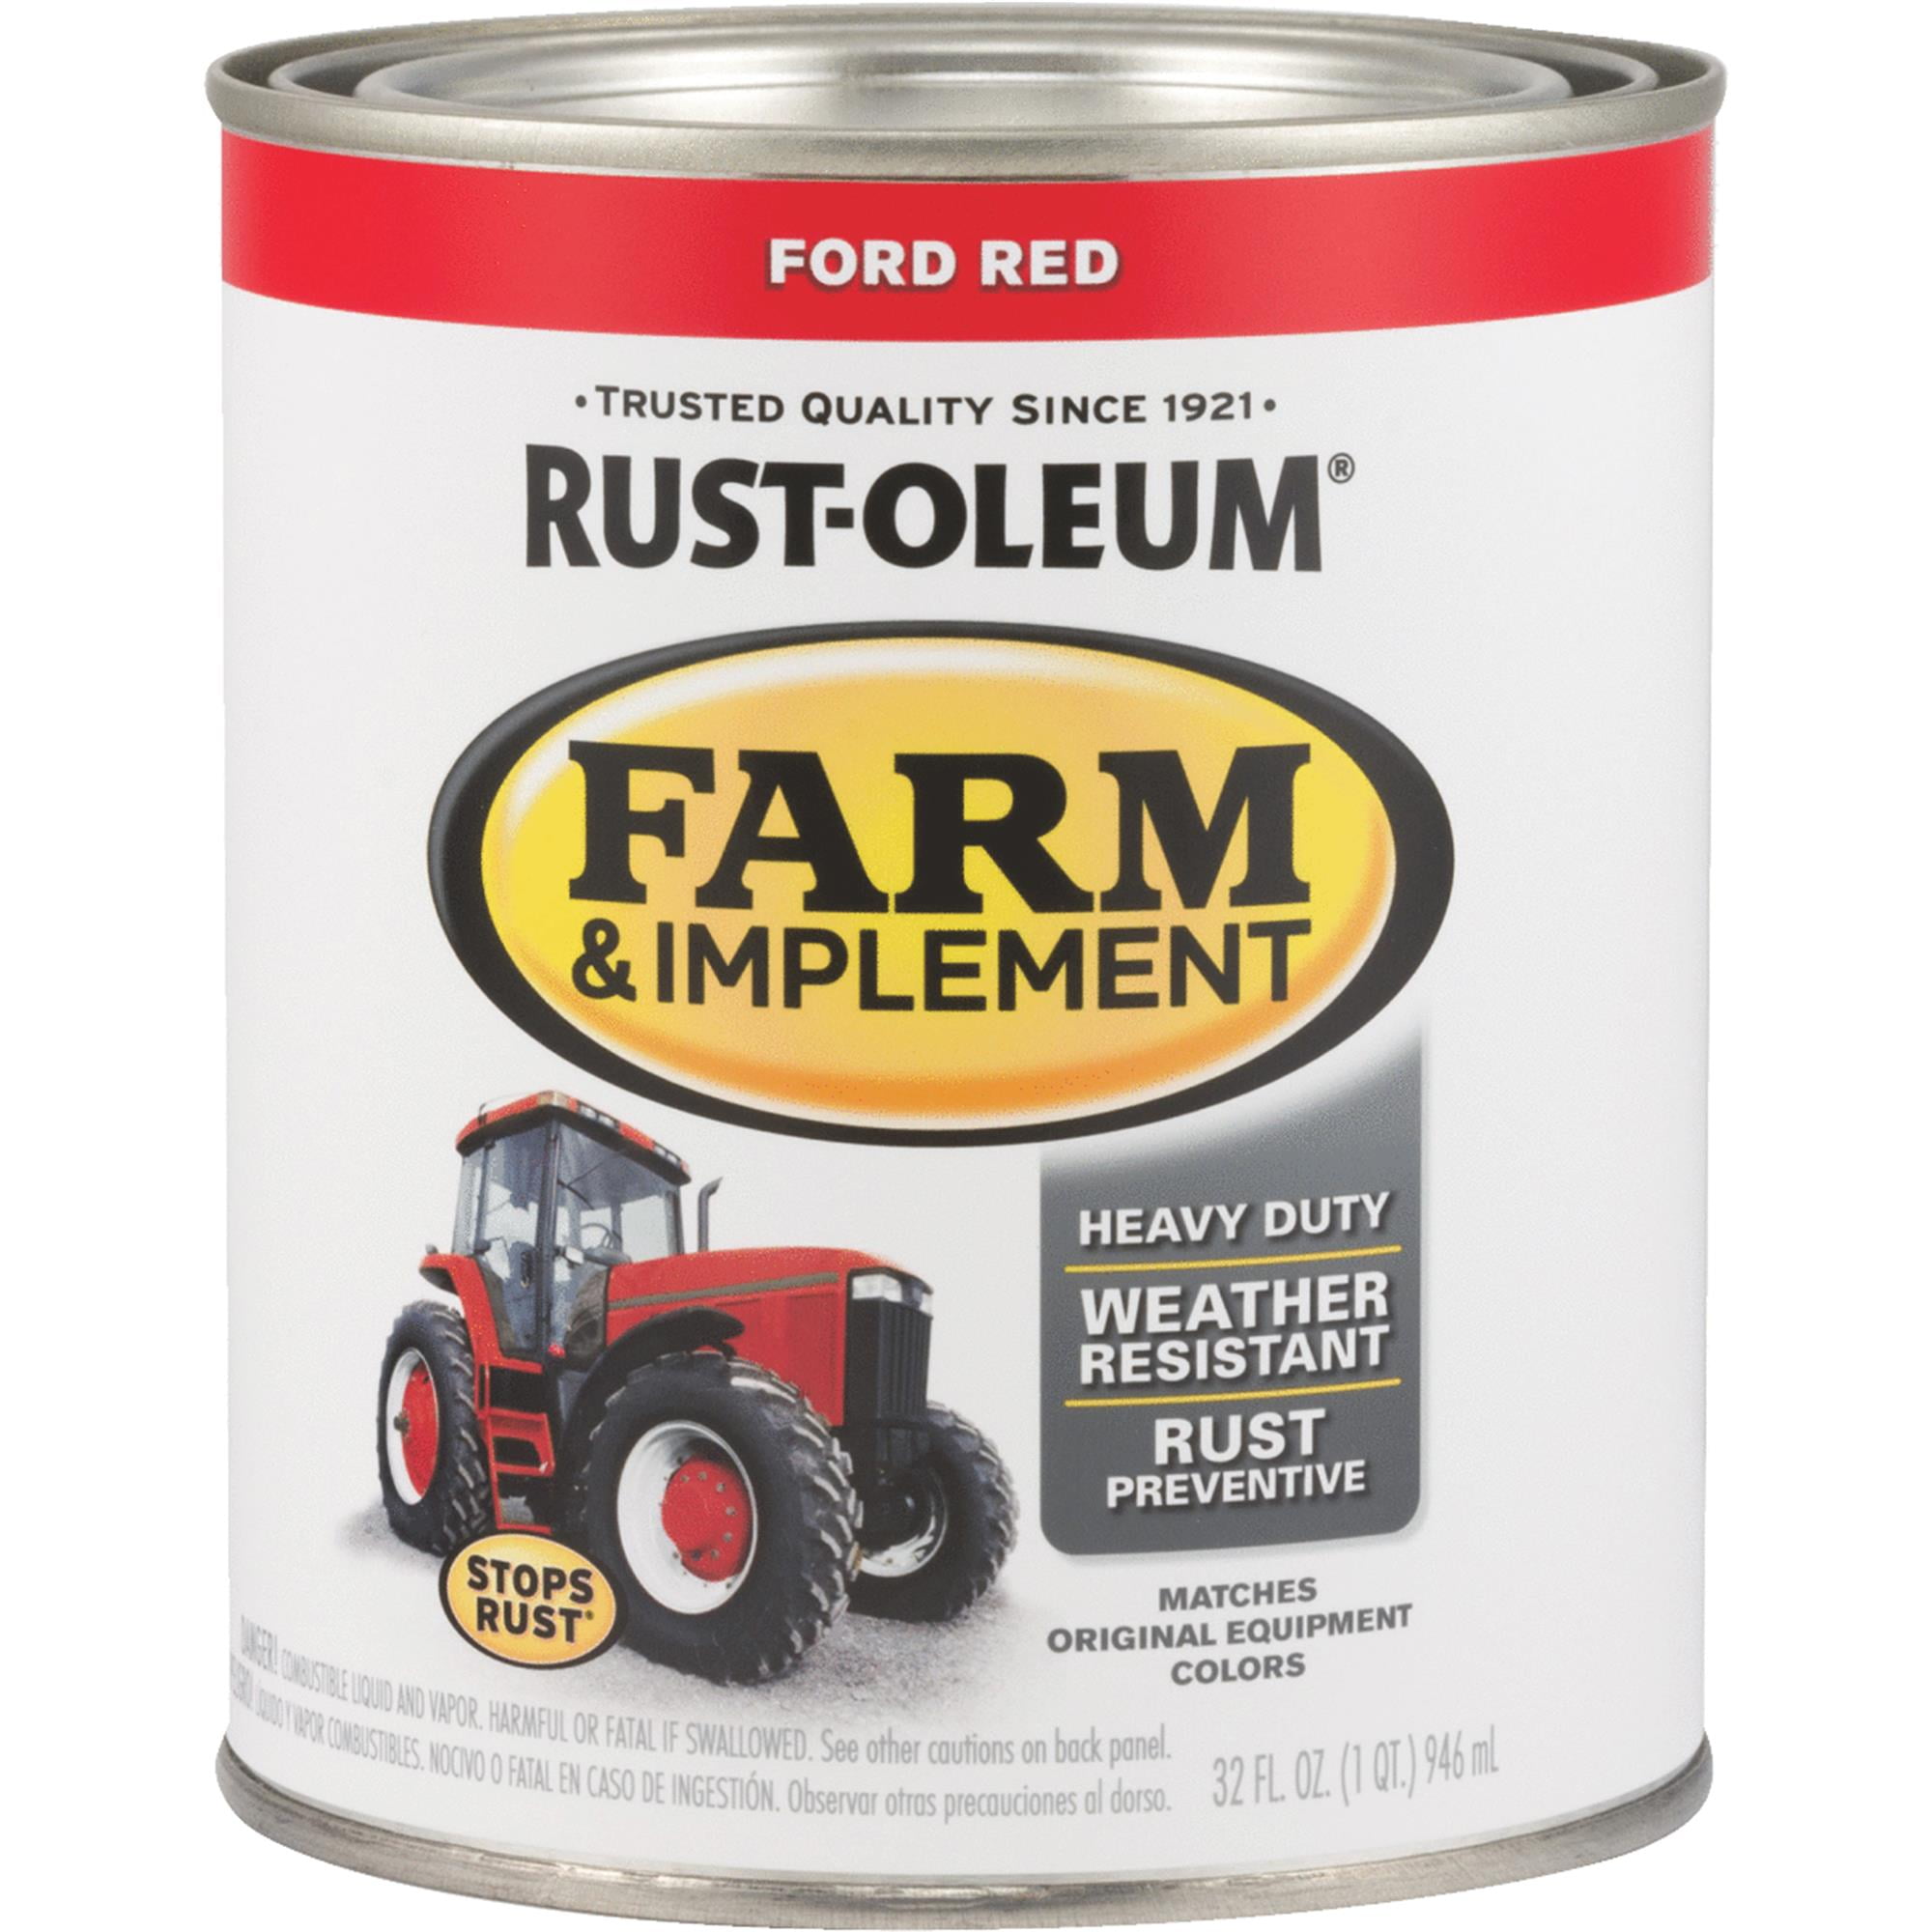 Rust-Oleum 2089-830 Stops Rust Protective Primer Spray Paint 12